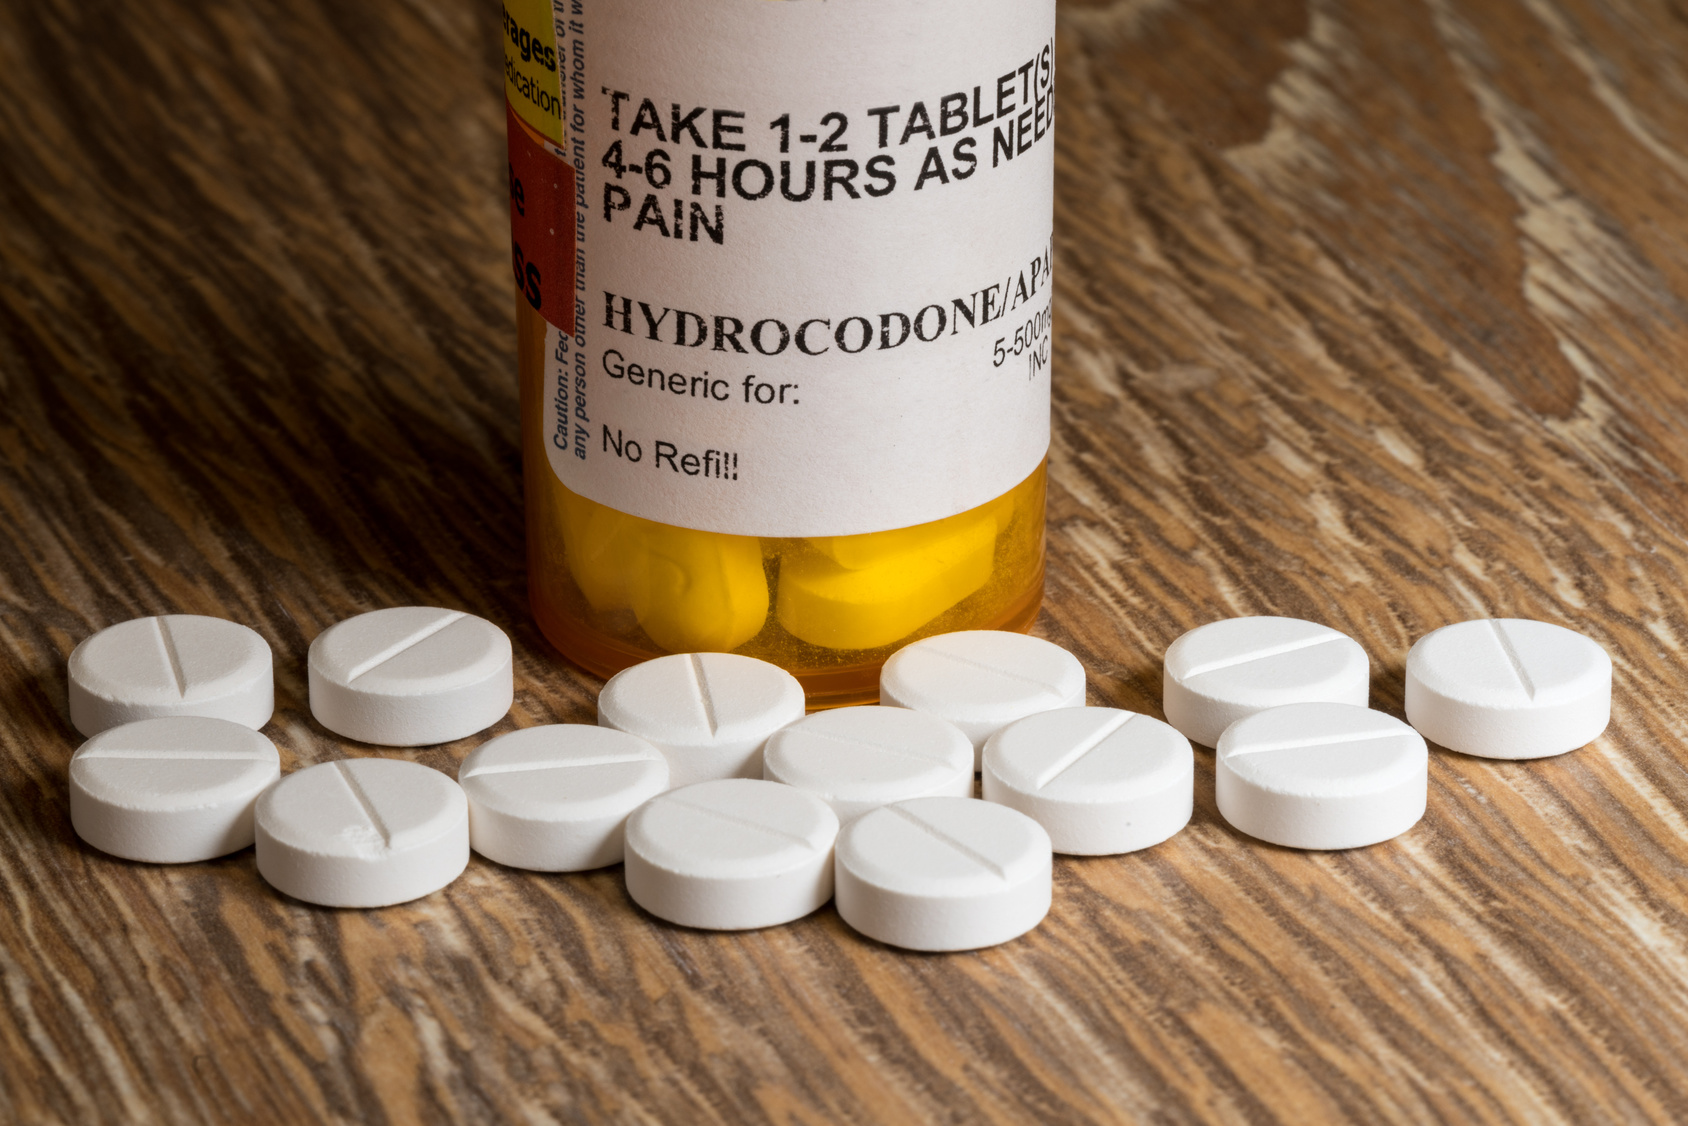 Landmark Decision Holds Drug Maker Responsible In Opioid Crisis